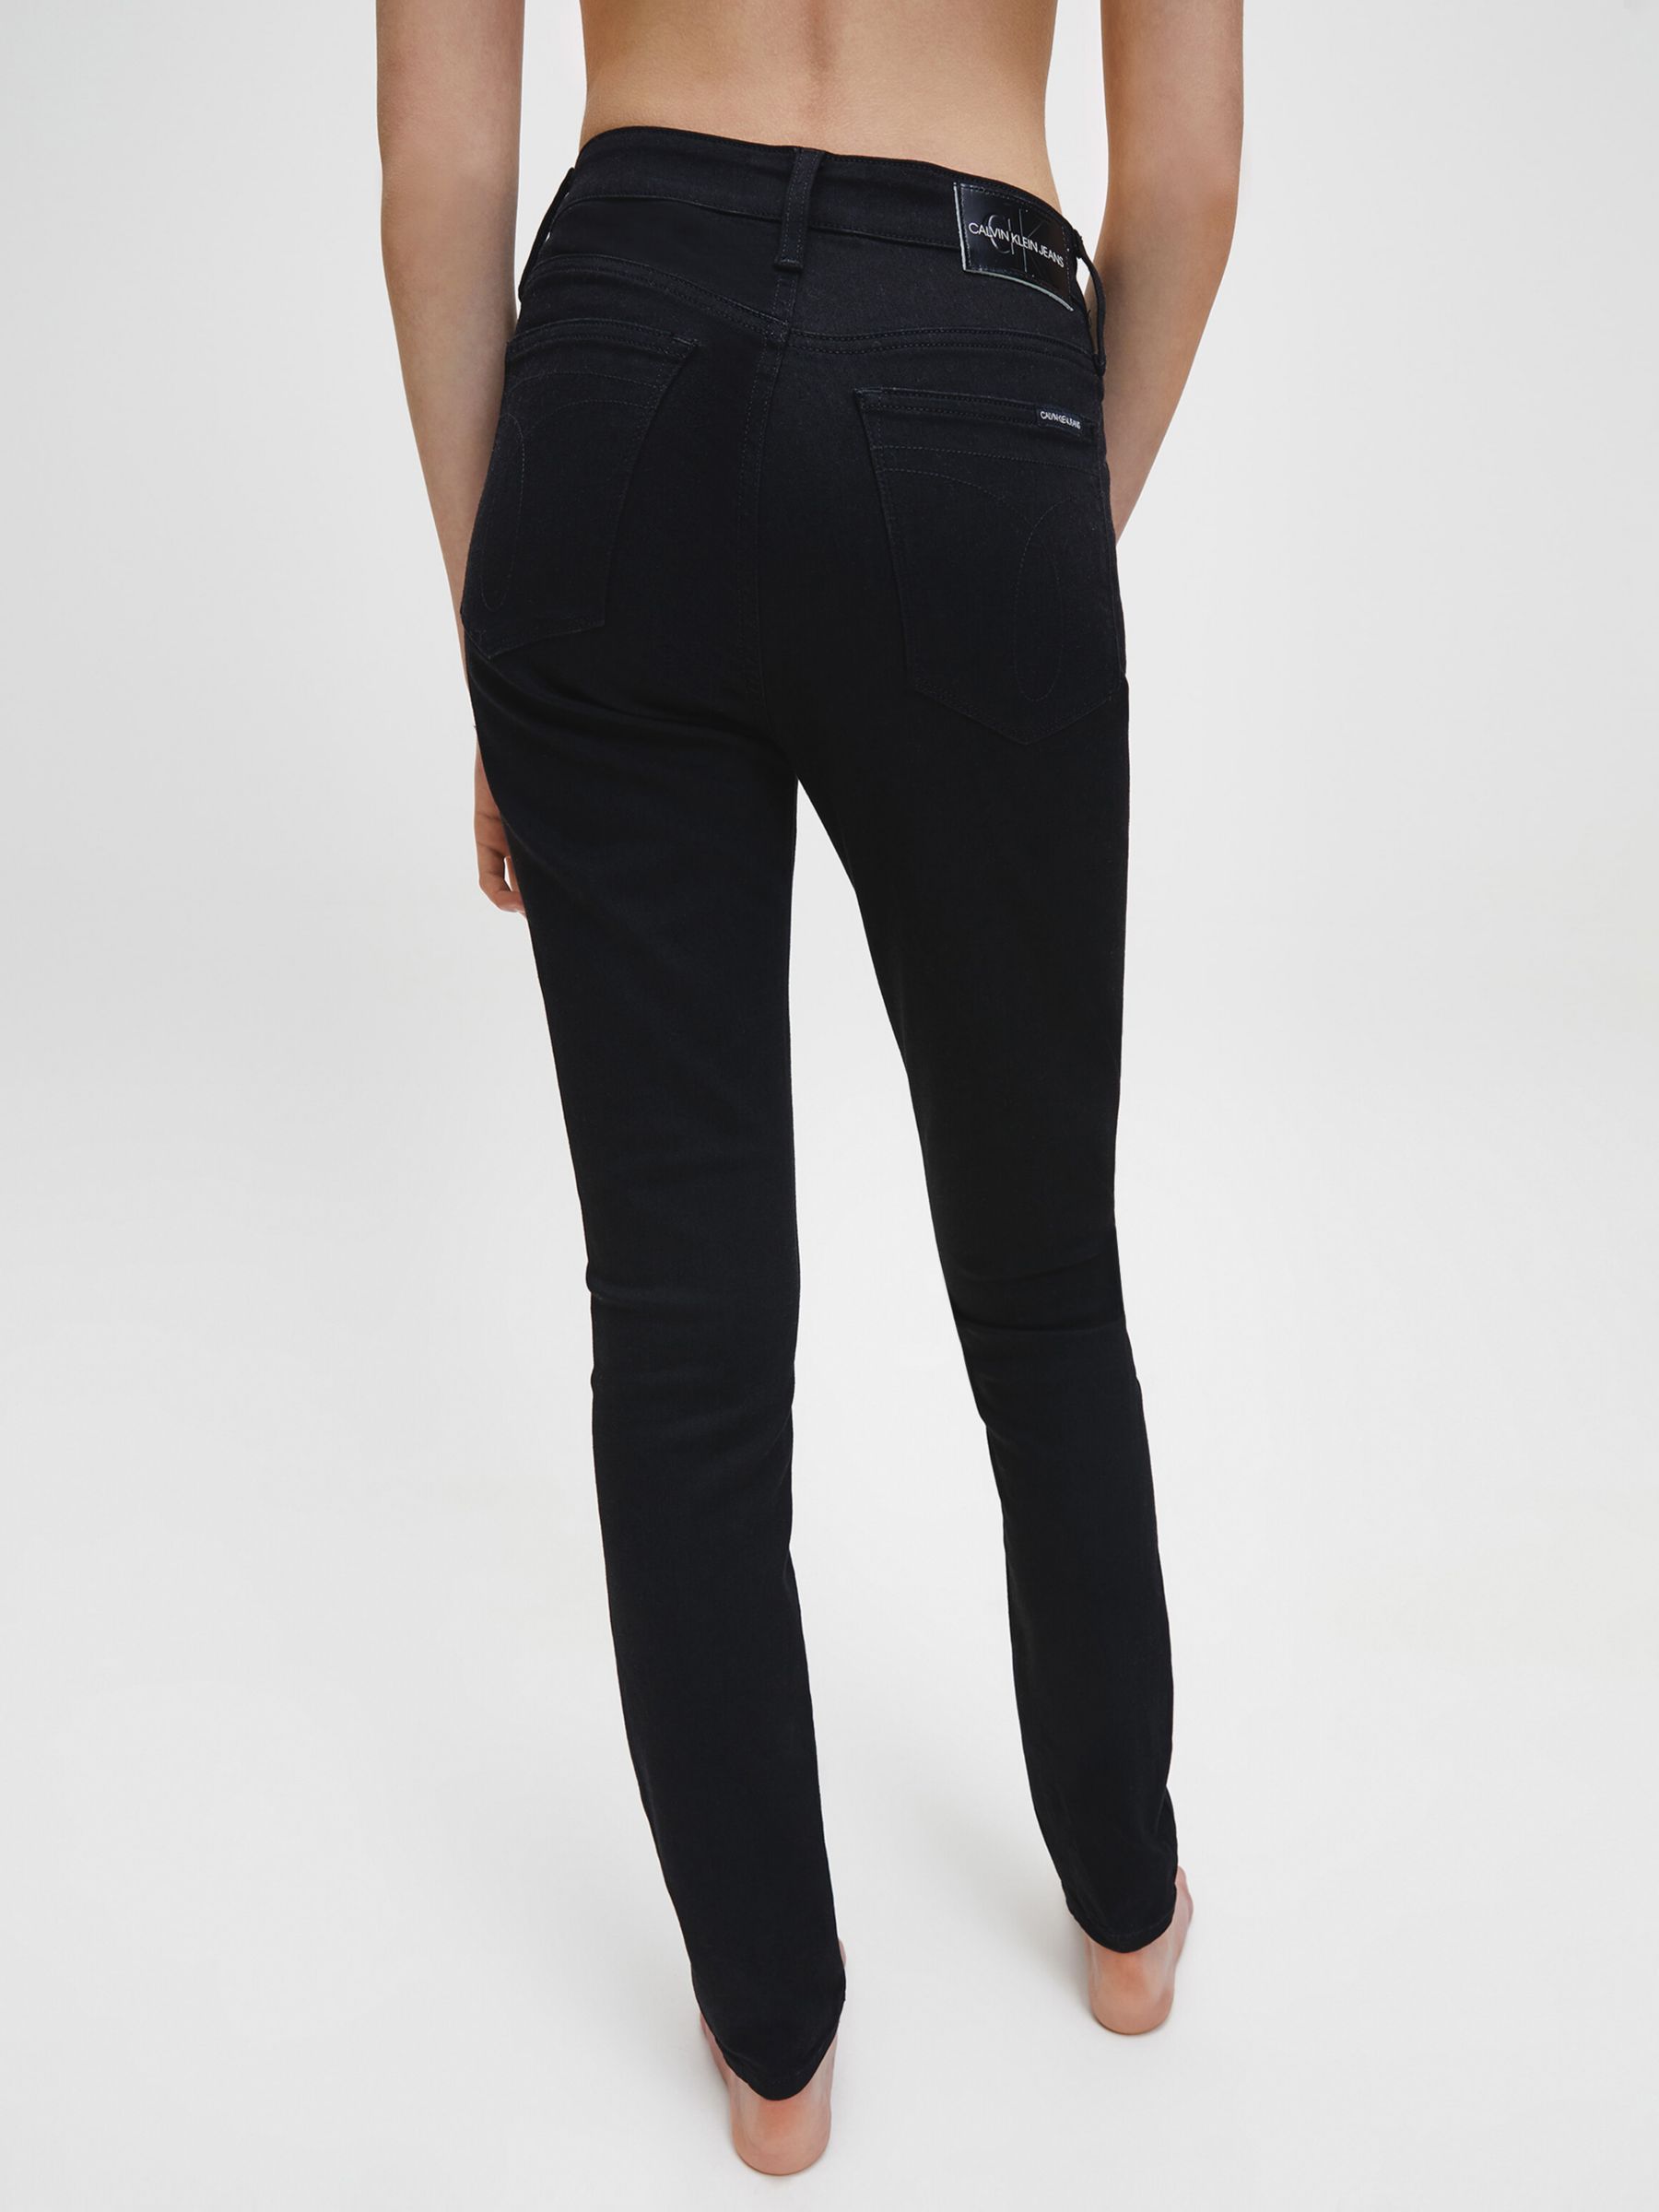 Calvin Klein High Rise Monogram Skinny Jeans, Black, 24R